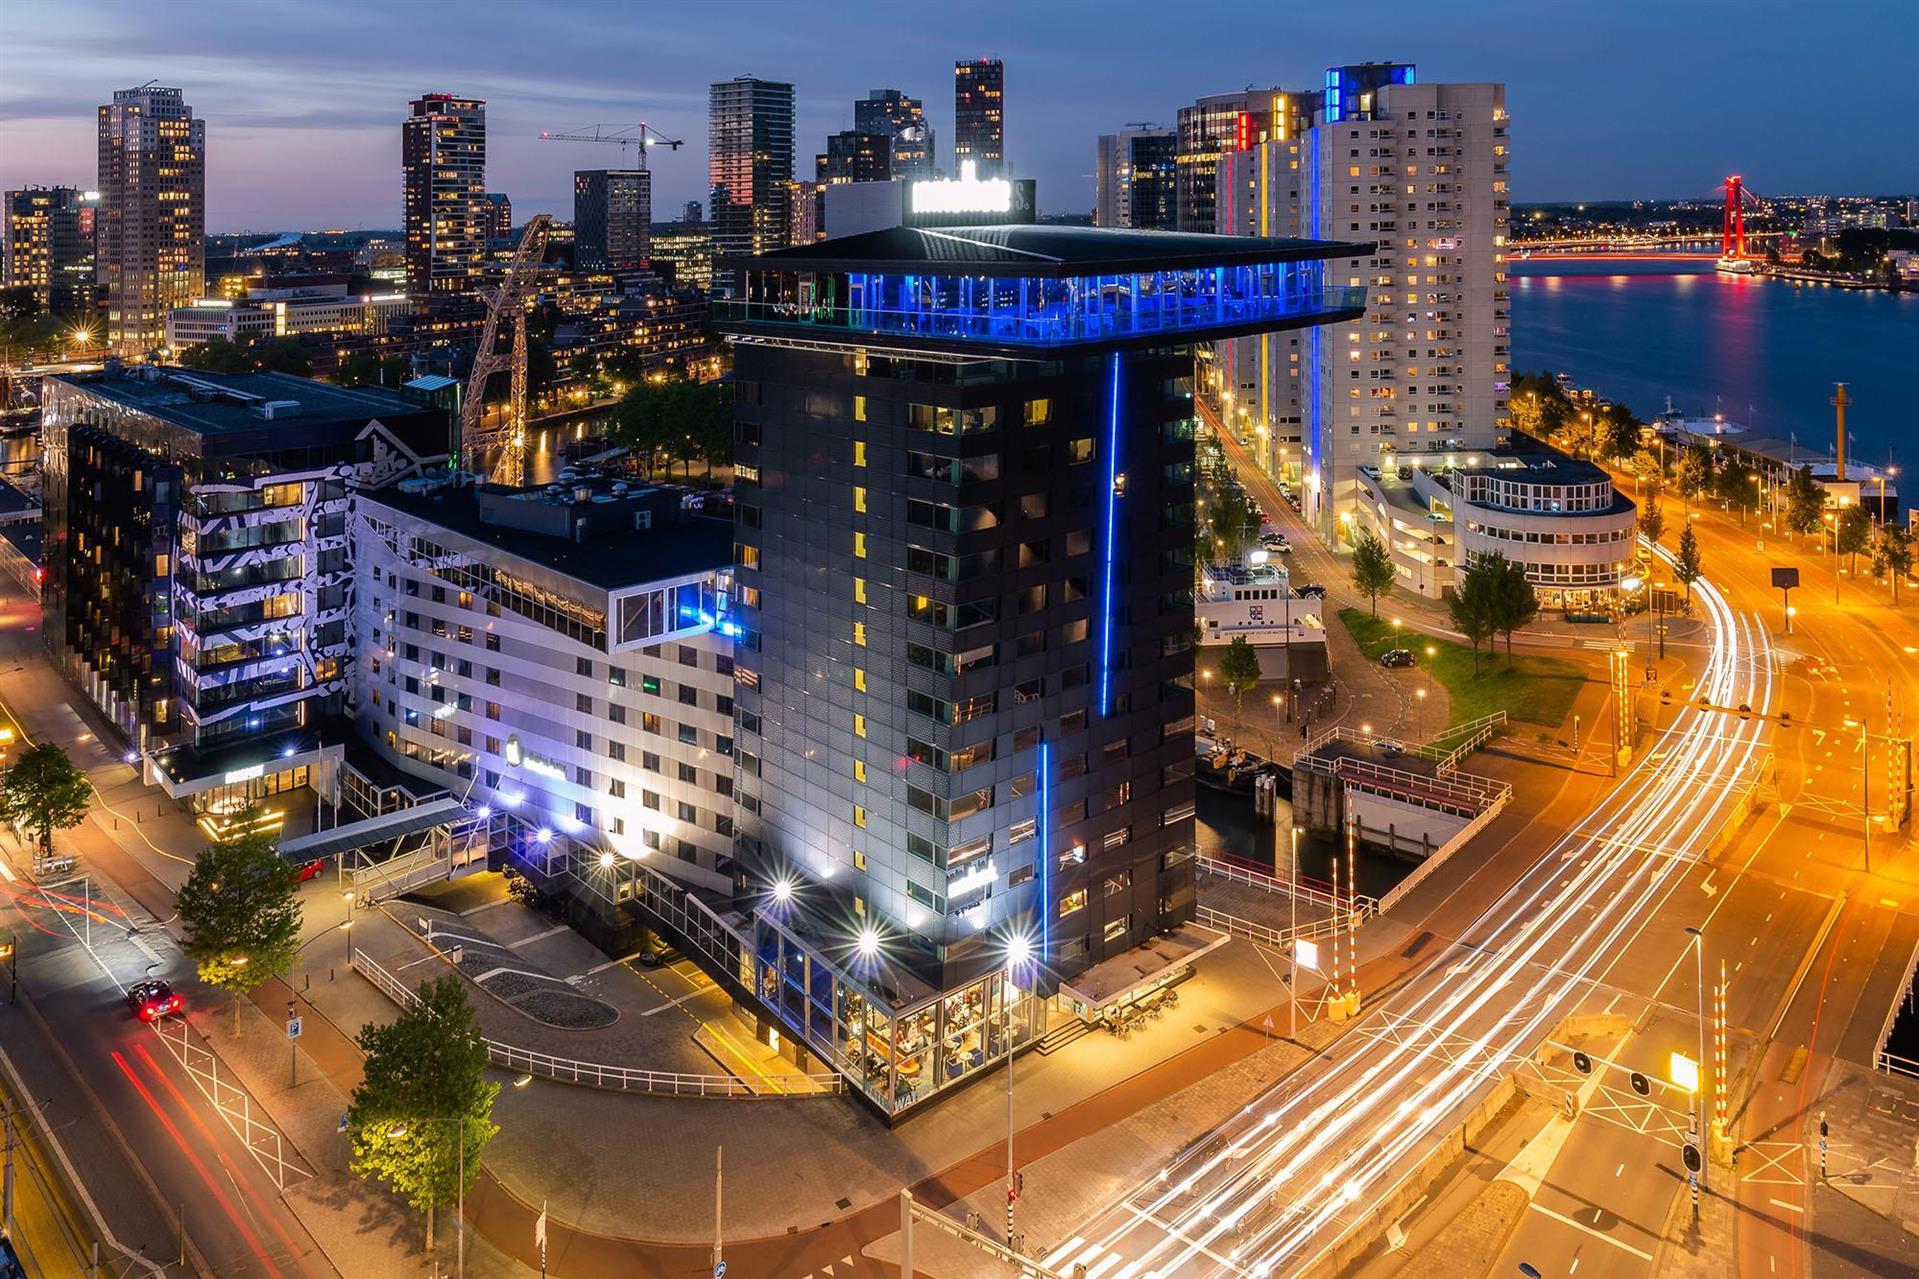 Mainport Hotel Rotterdam a Hilton Affiliate Hotel in Rotterdam, NL